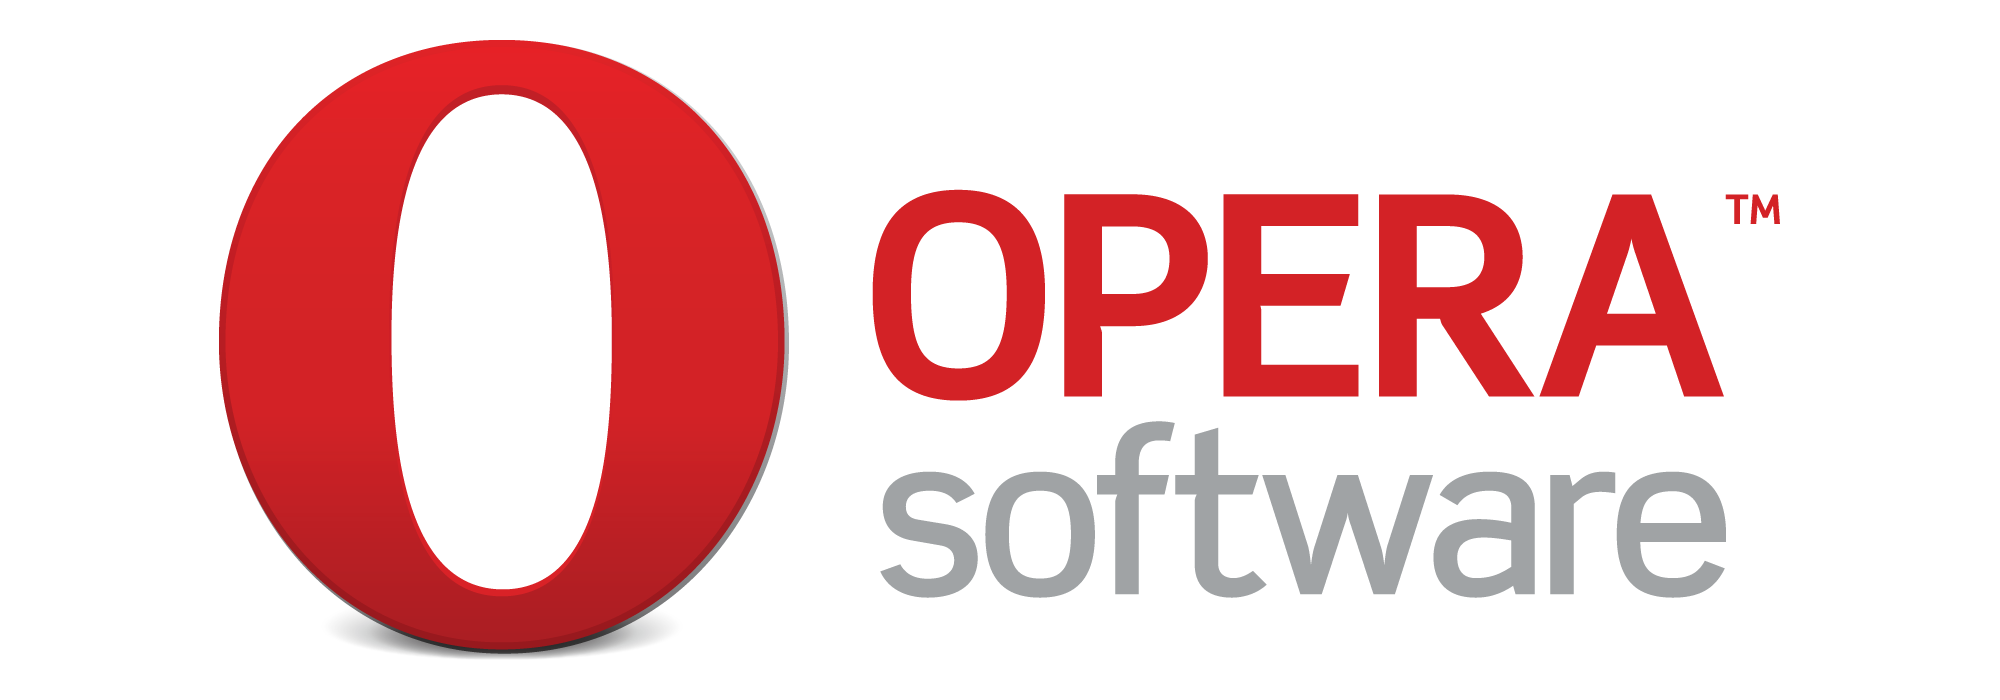 Opera Logo.png - Opera, Transparent background PNG HD thumbnail